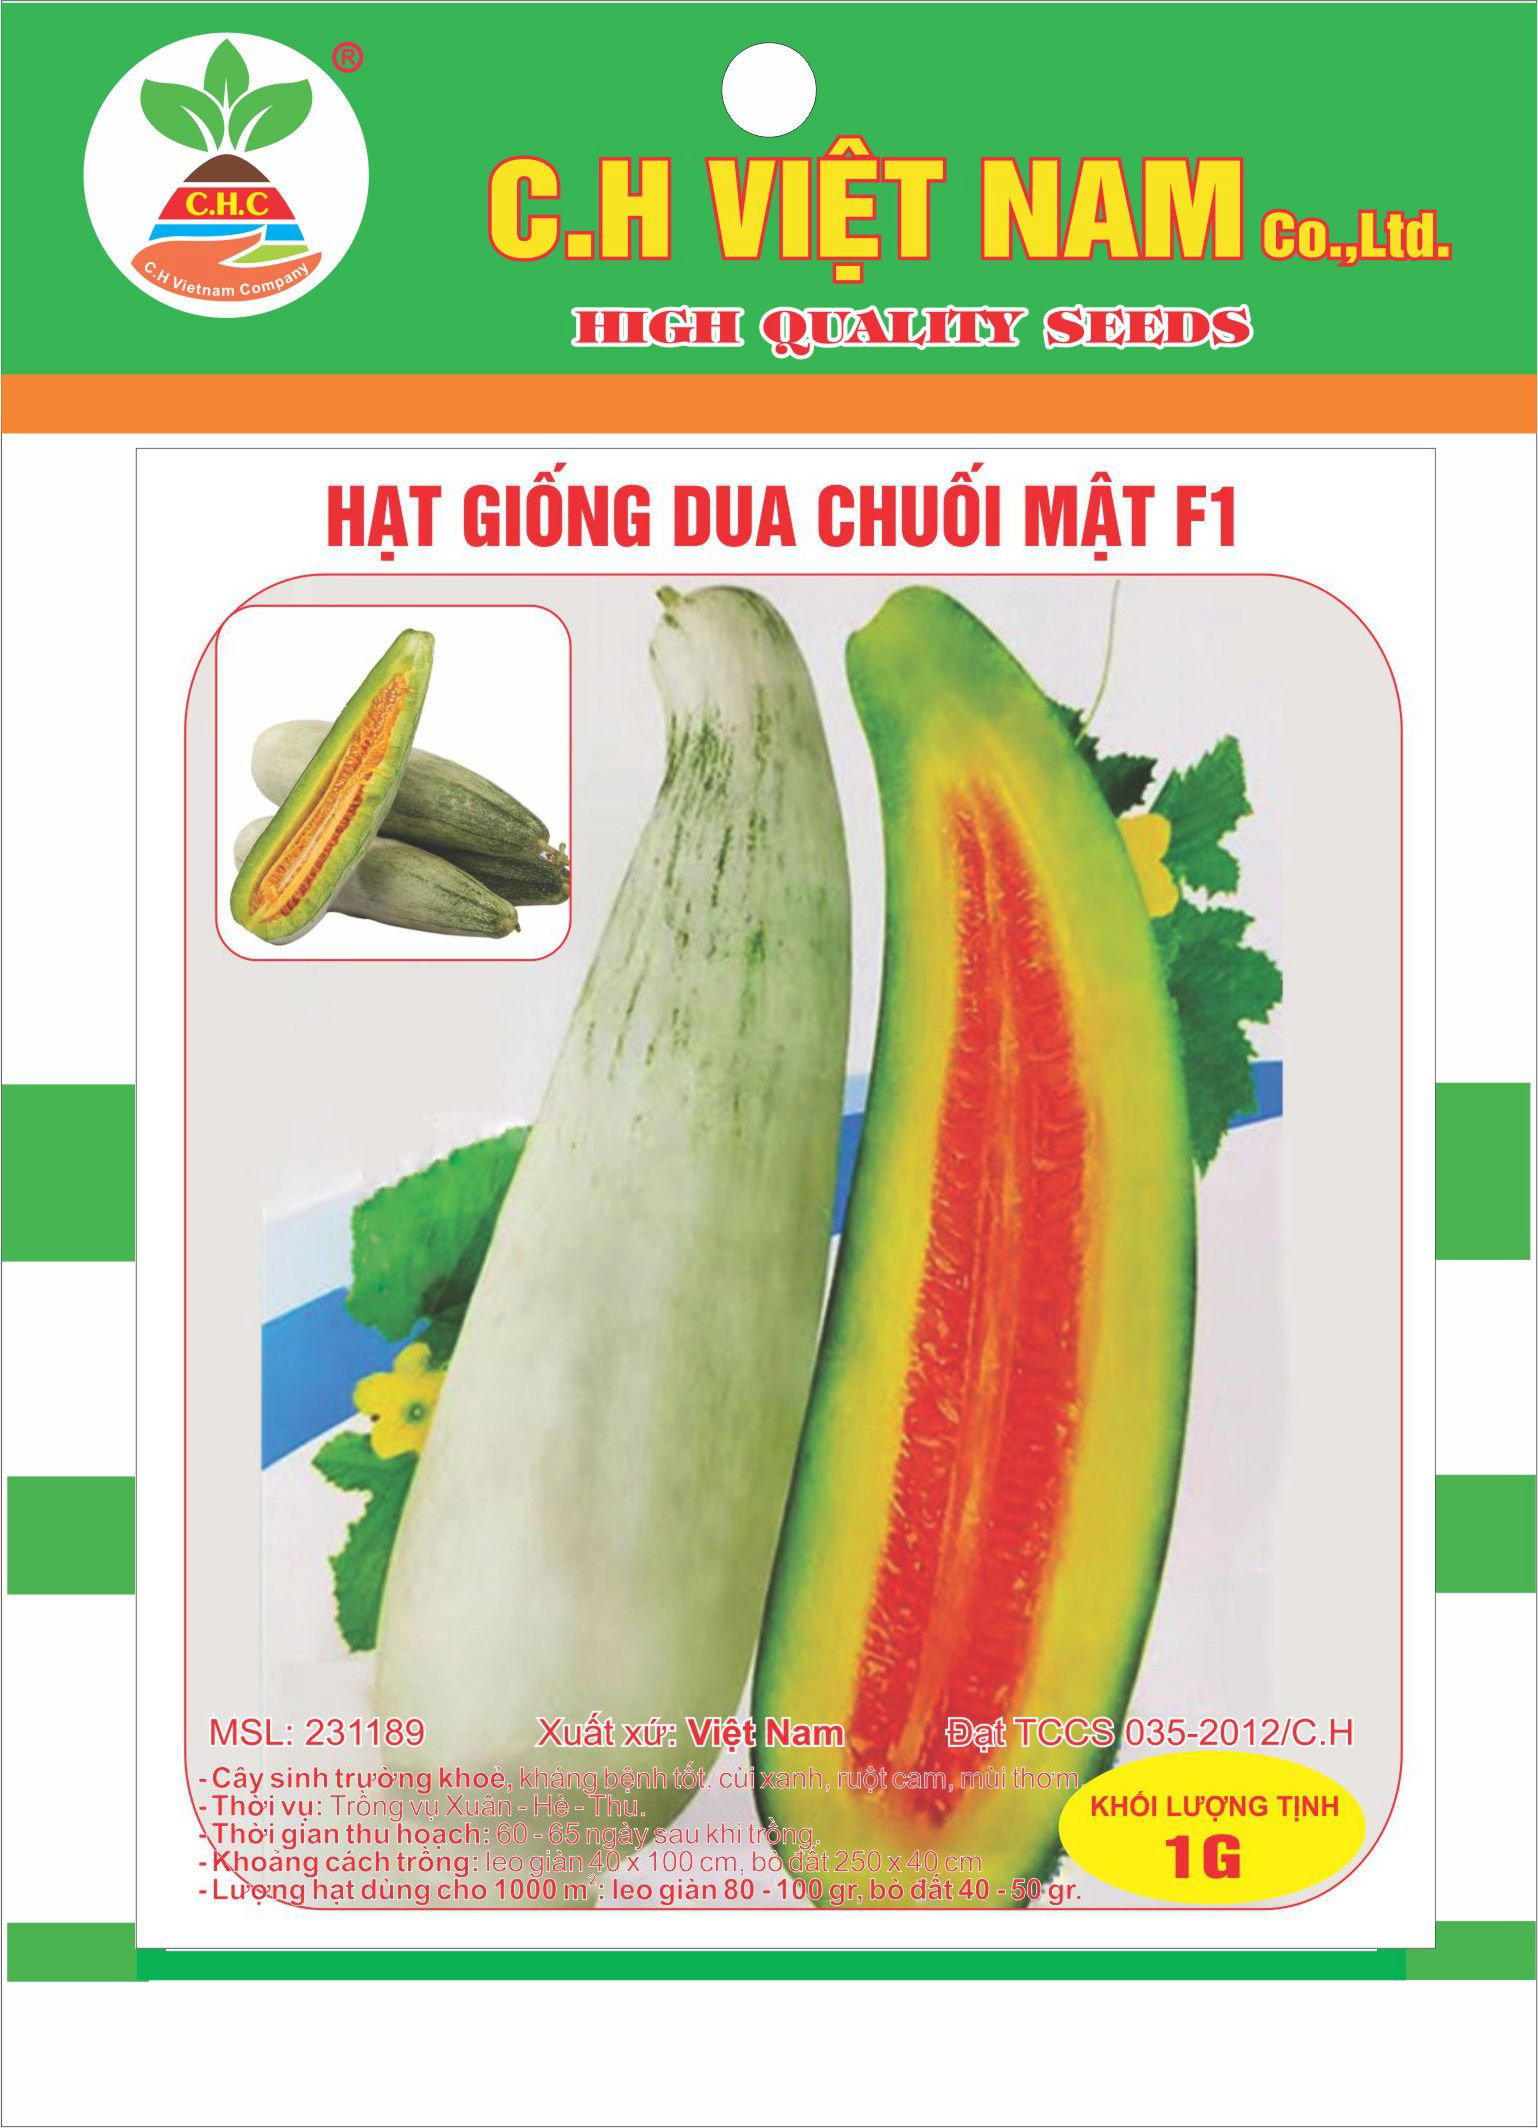 F1 Japanese banana melon seeds